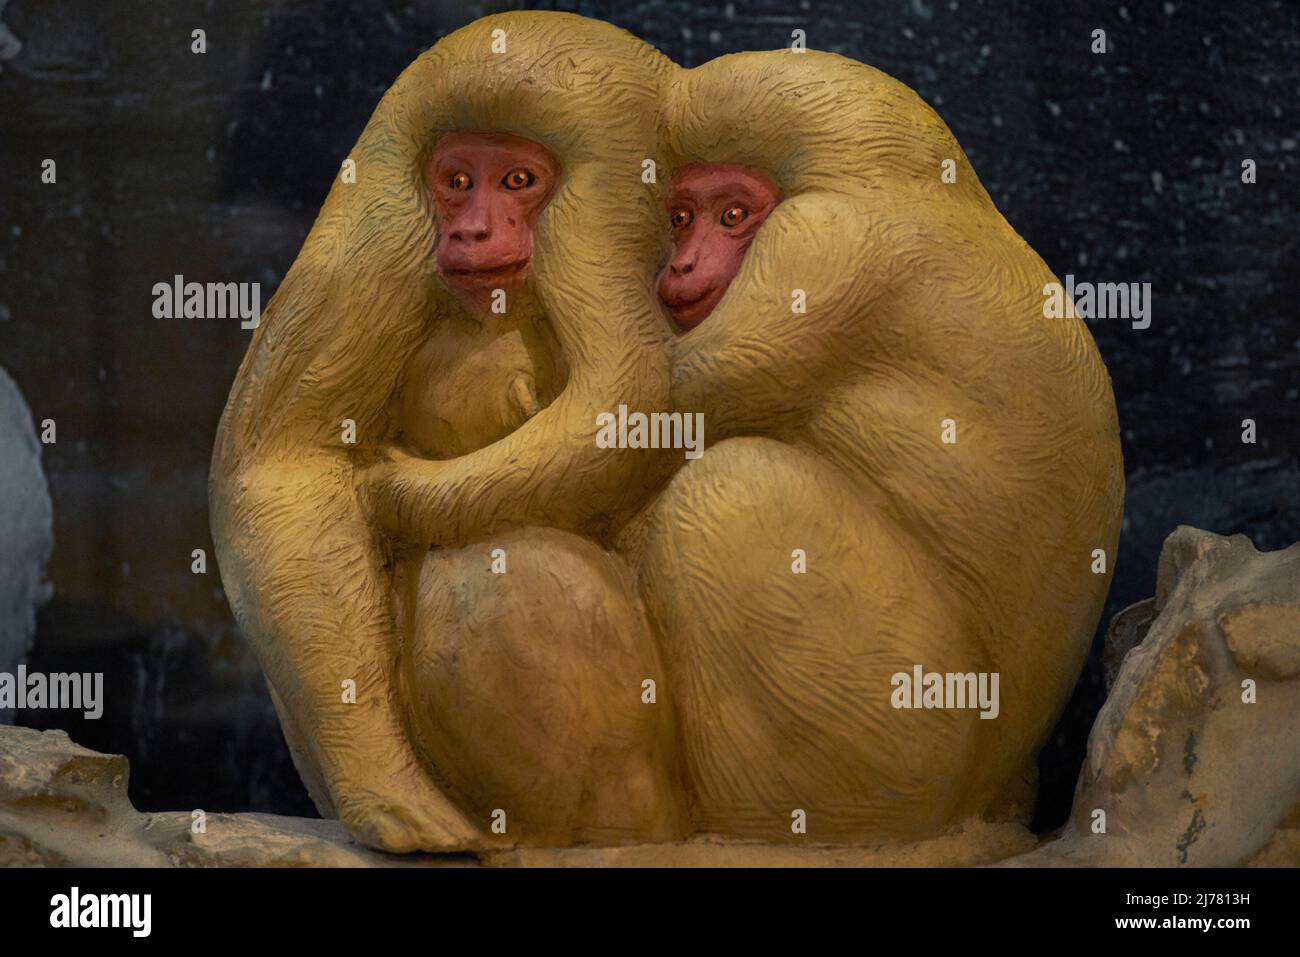 Japanese macaque (Macaca fuscata) snow monkey statue Stock Photo